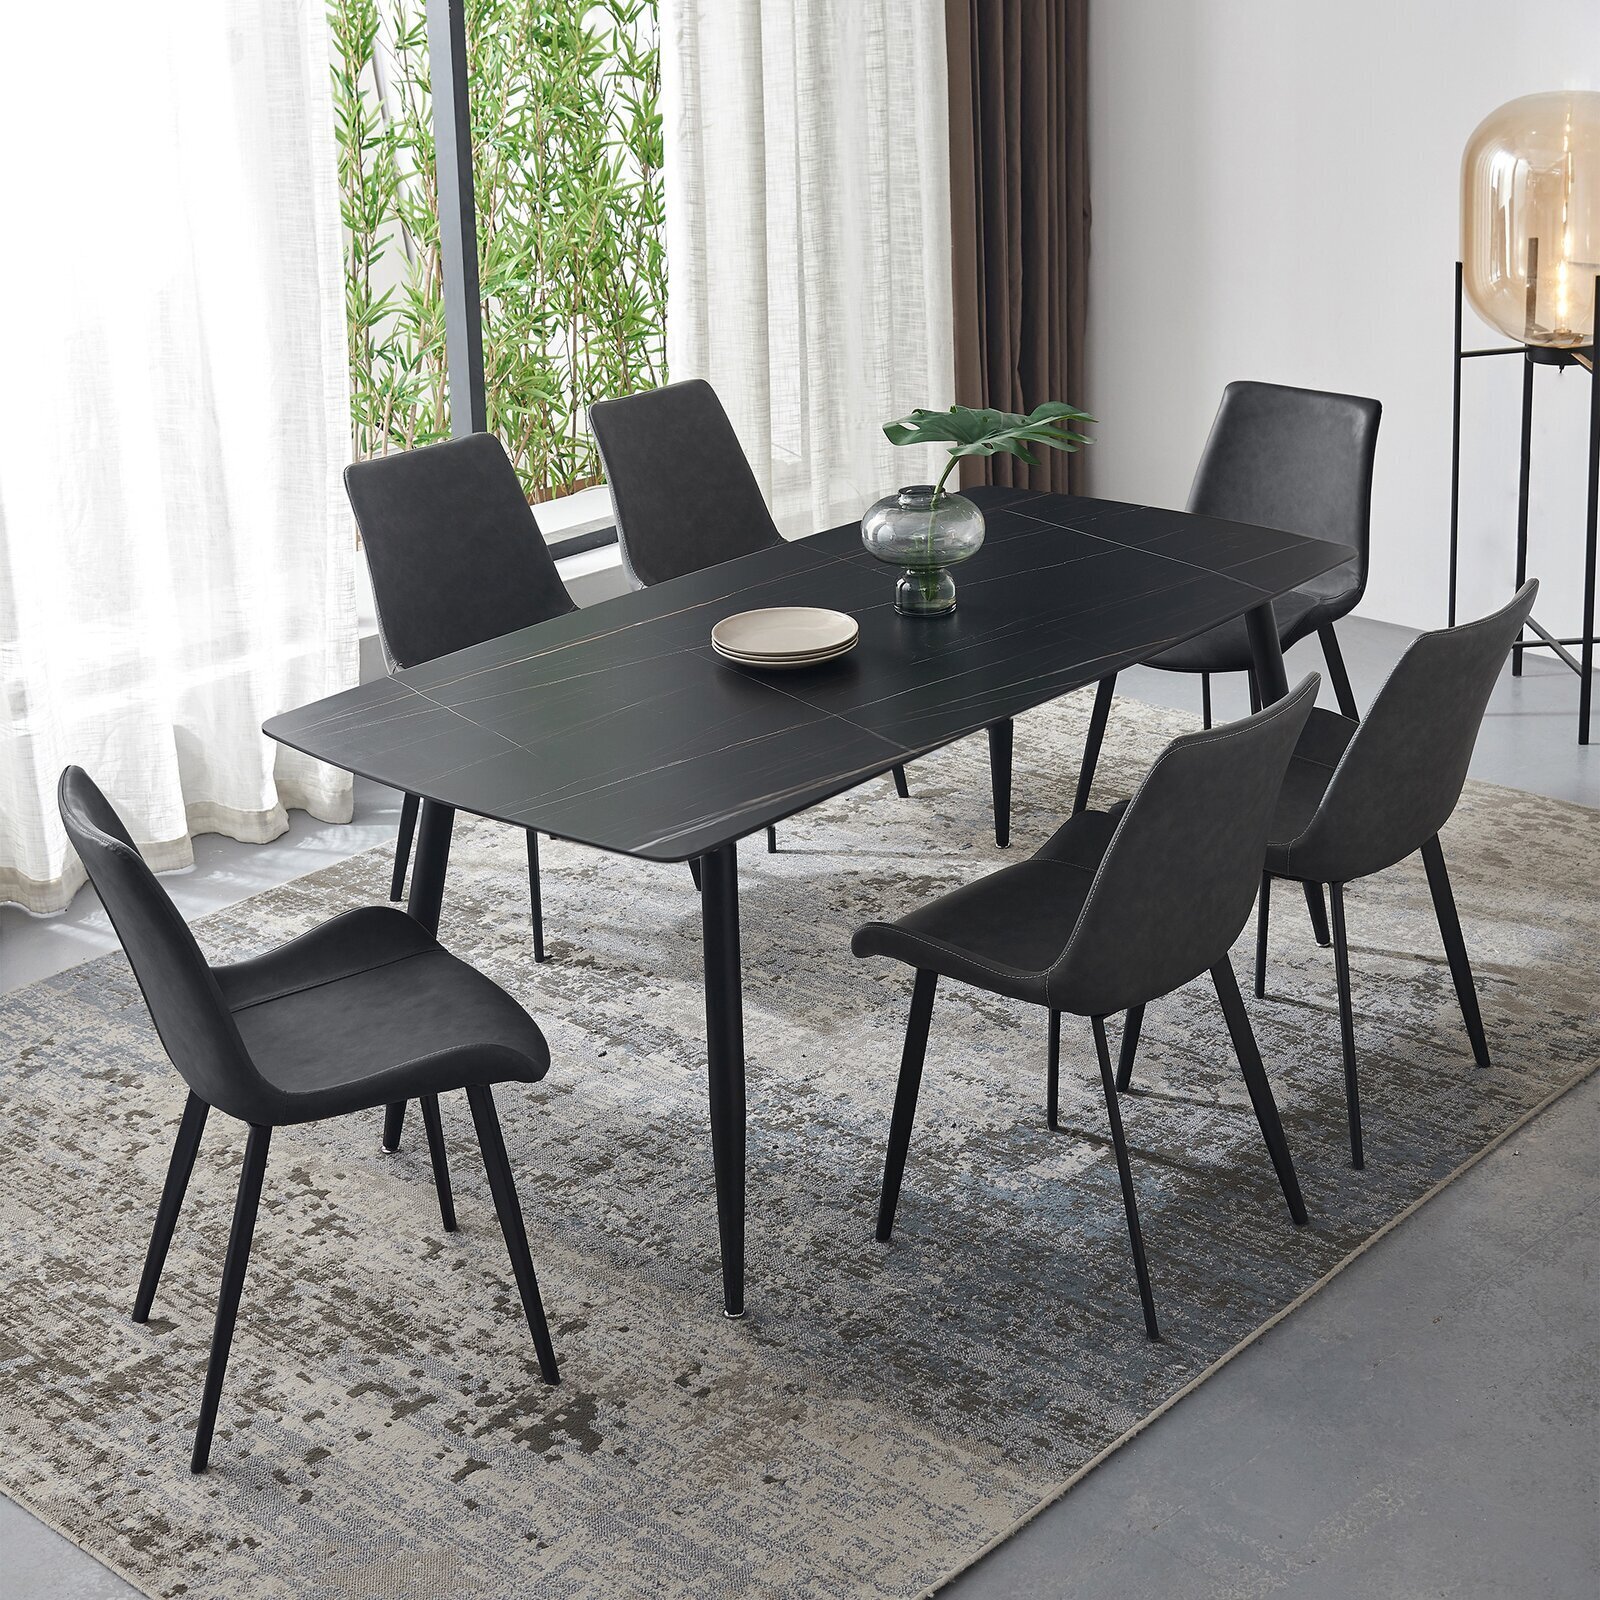 Black granite dining table set with a Scandi design